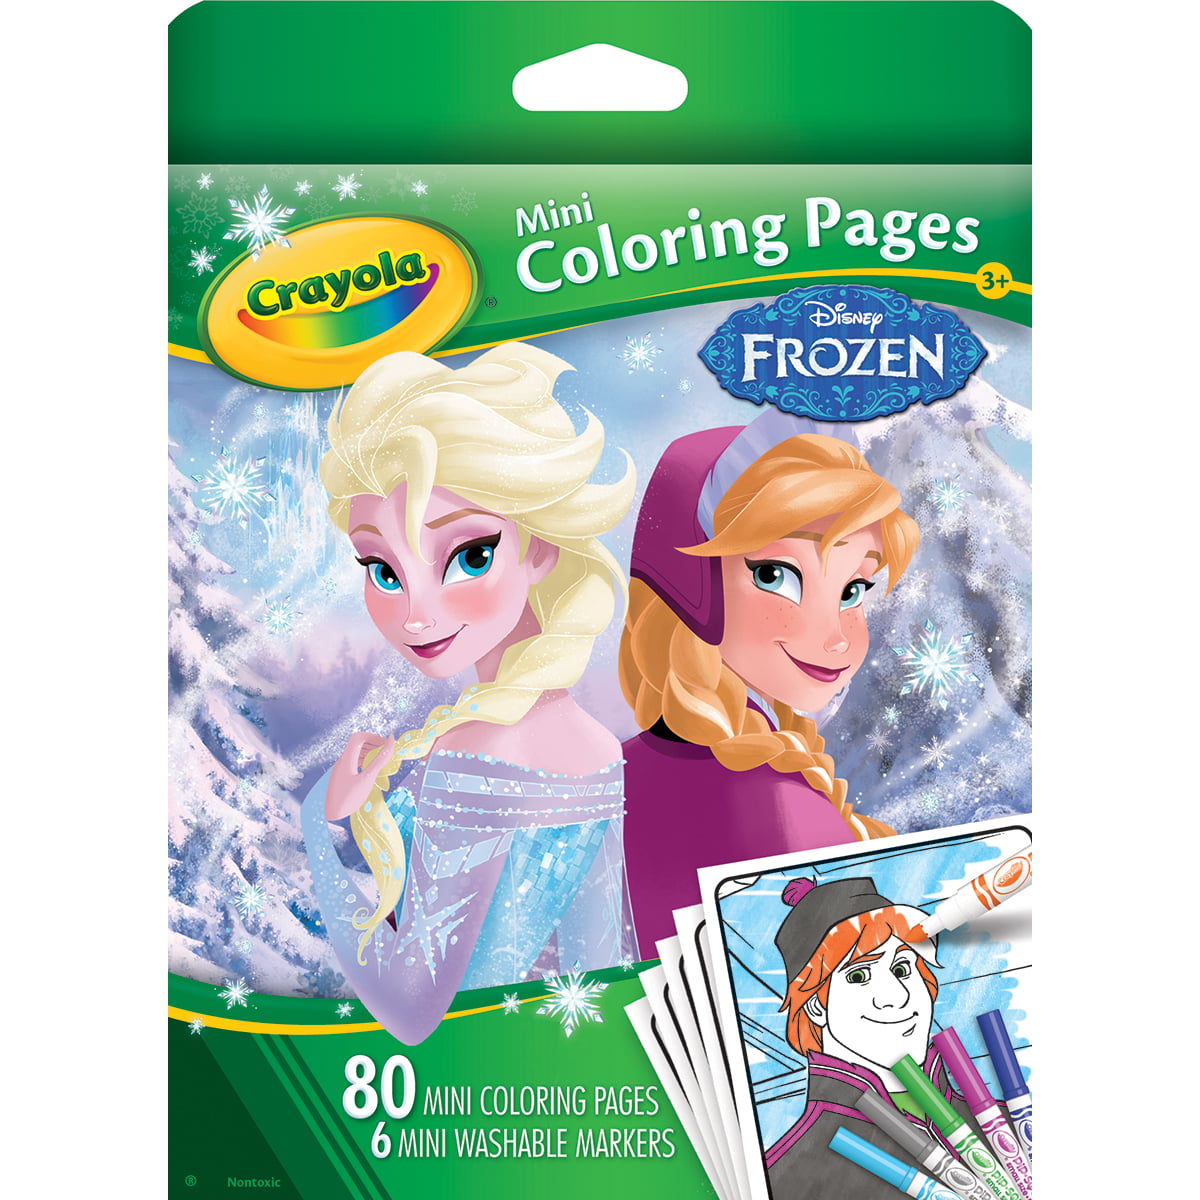  Crayola  Mini  Coloring  Pages  Disney  Frozen Walmart com